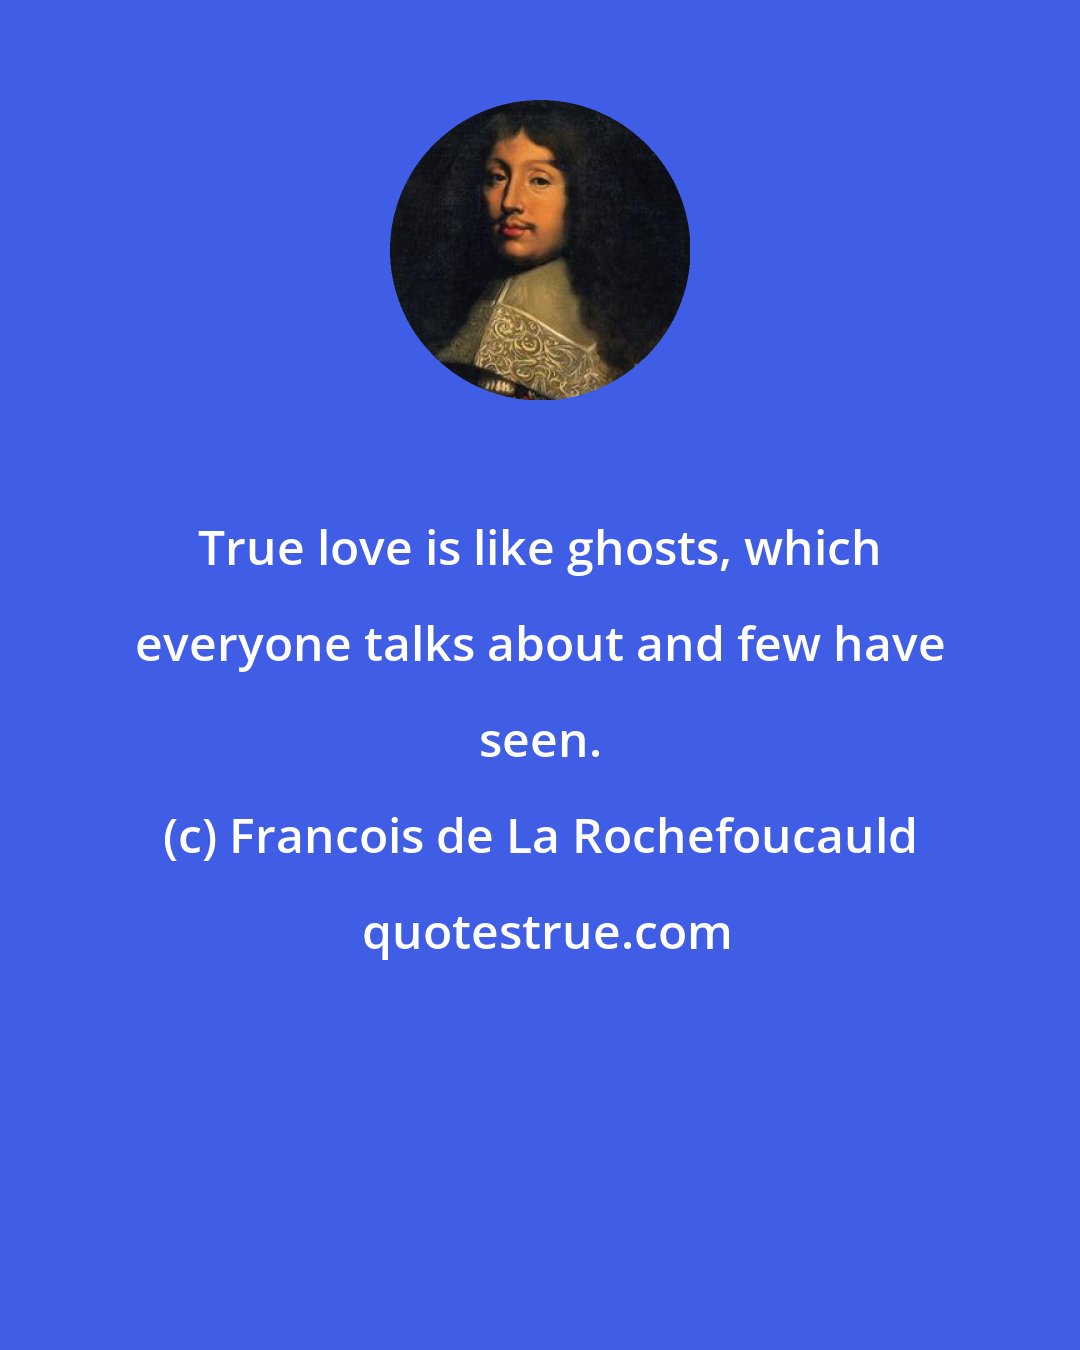 Francois de La Rochefoucauld: True love is like ghosts, which everyone talks about and few have seen.